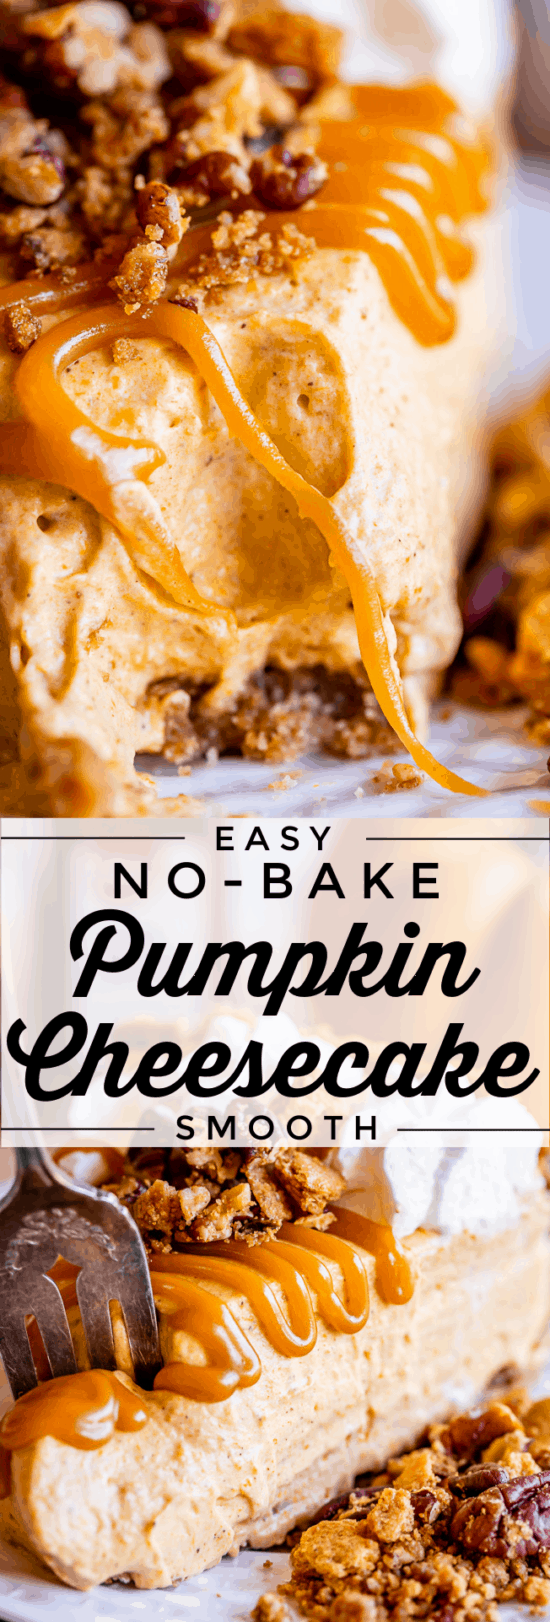 how to make no bake pumpkin cheesecake